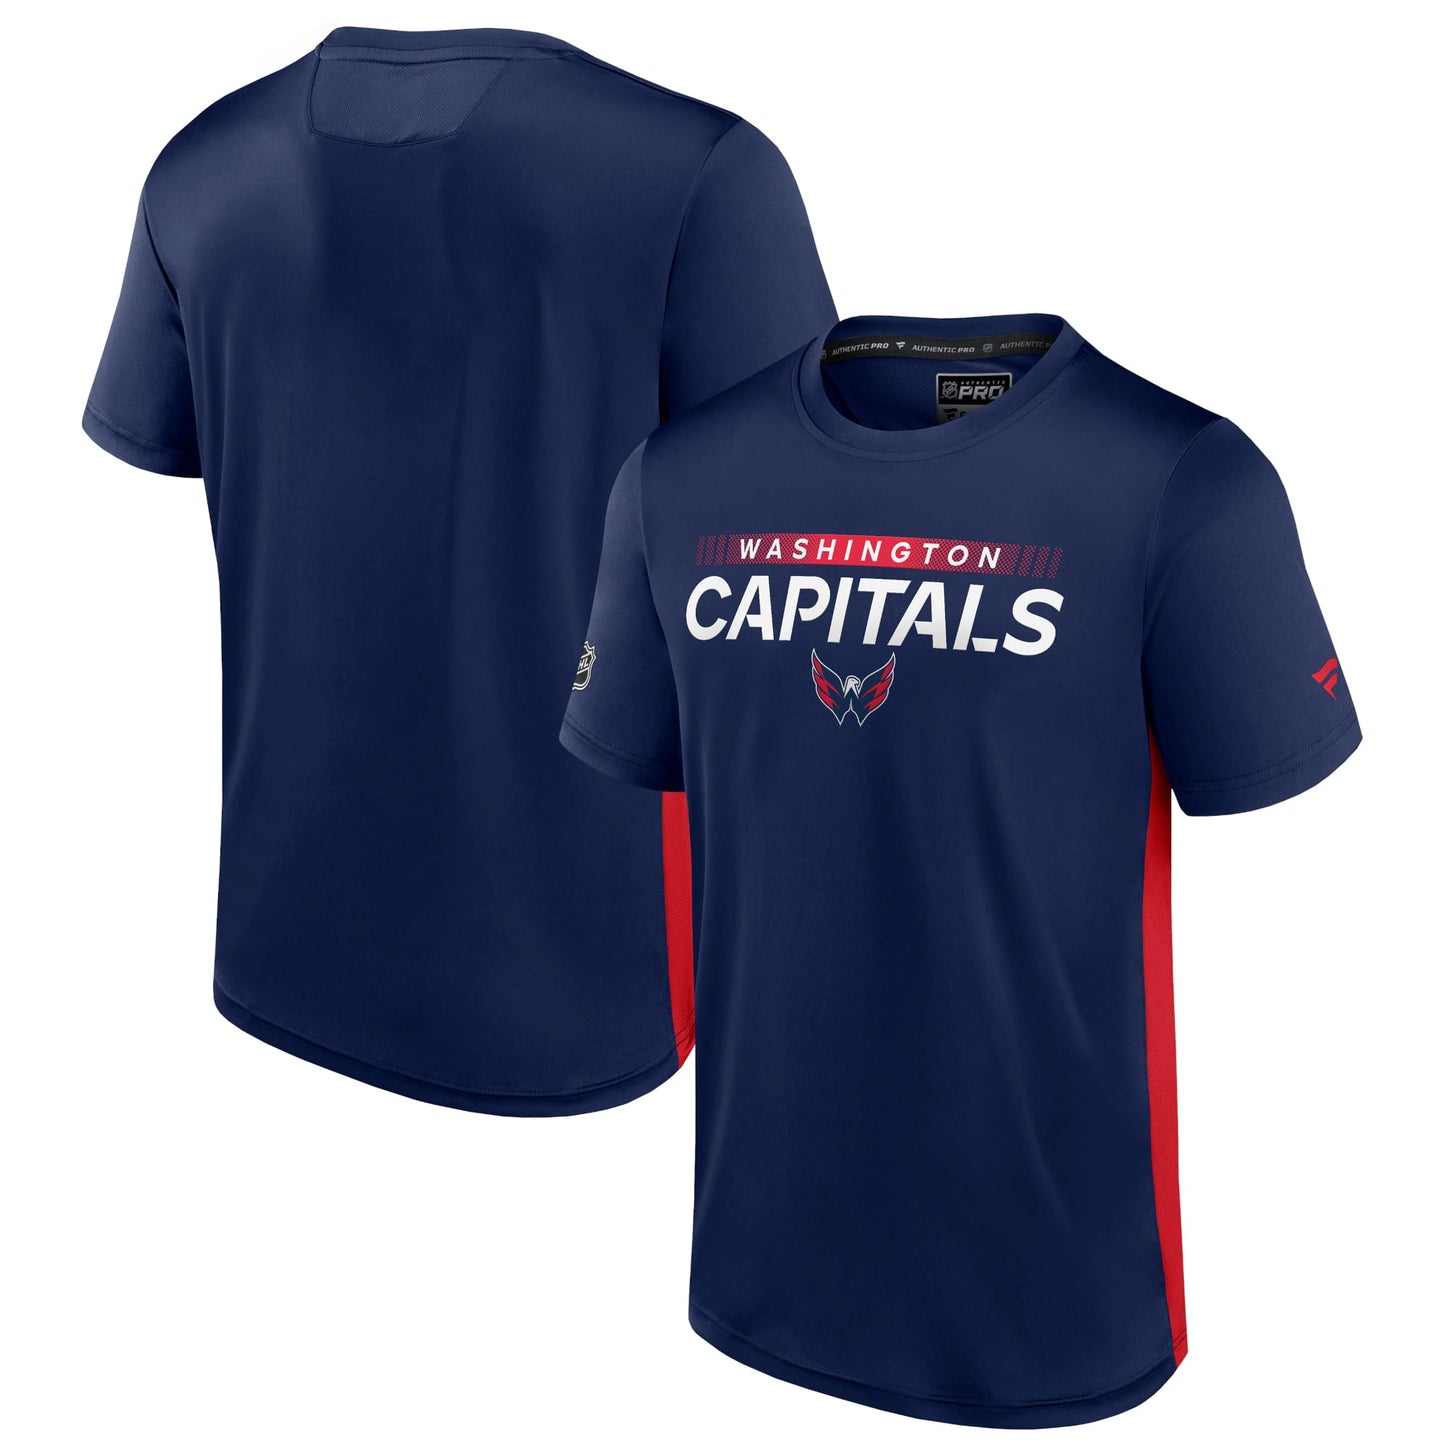 Men's Fanatics Branded Navy/Red Washington Capitals Authentic Pro Rink Tech T-Shirt